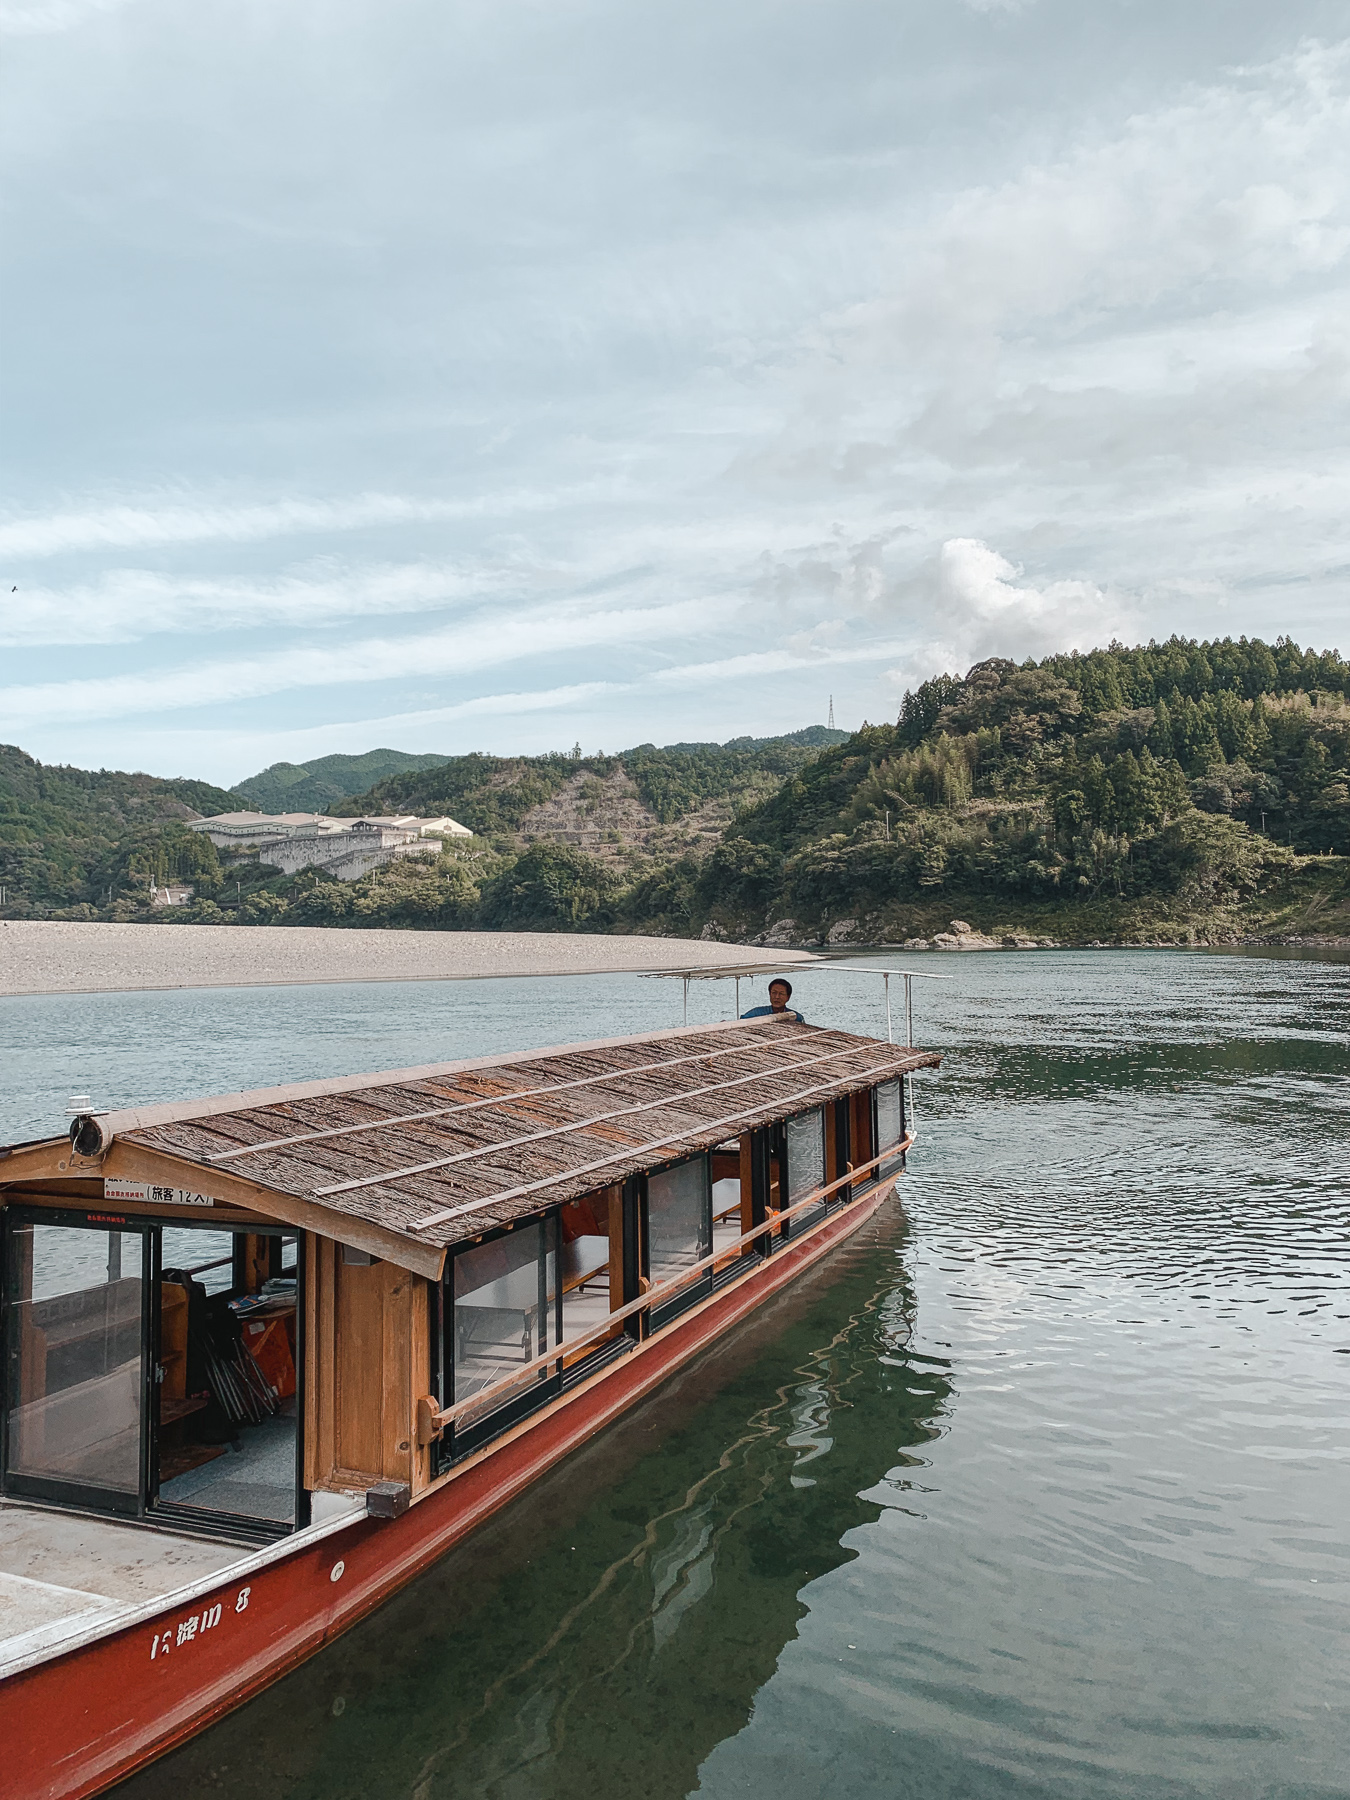 How To Spend 4 Days In Shikoku, Japan | lifestyletraveler.co | IG: @lifestyletraveler.co